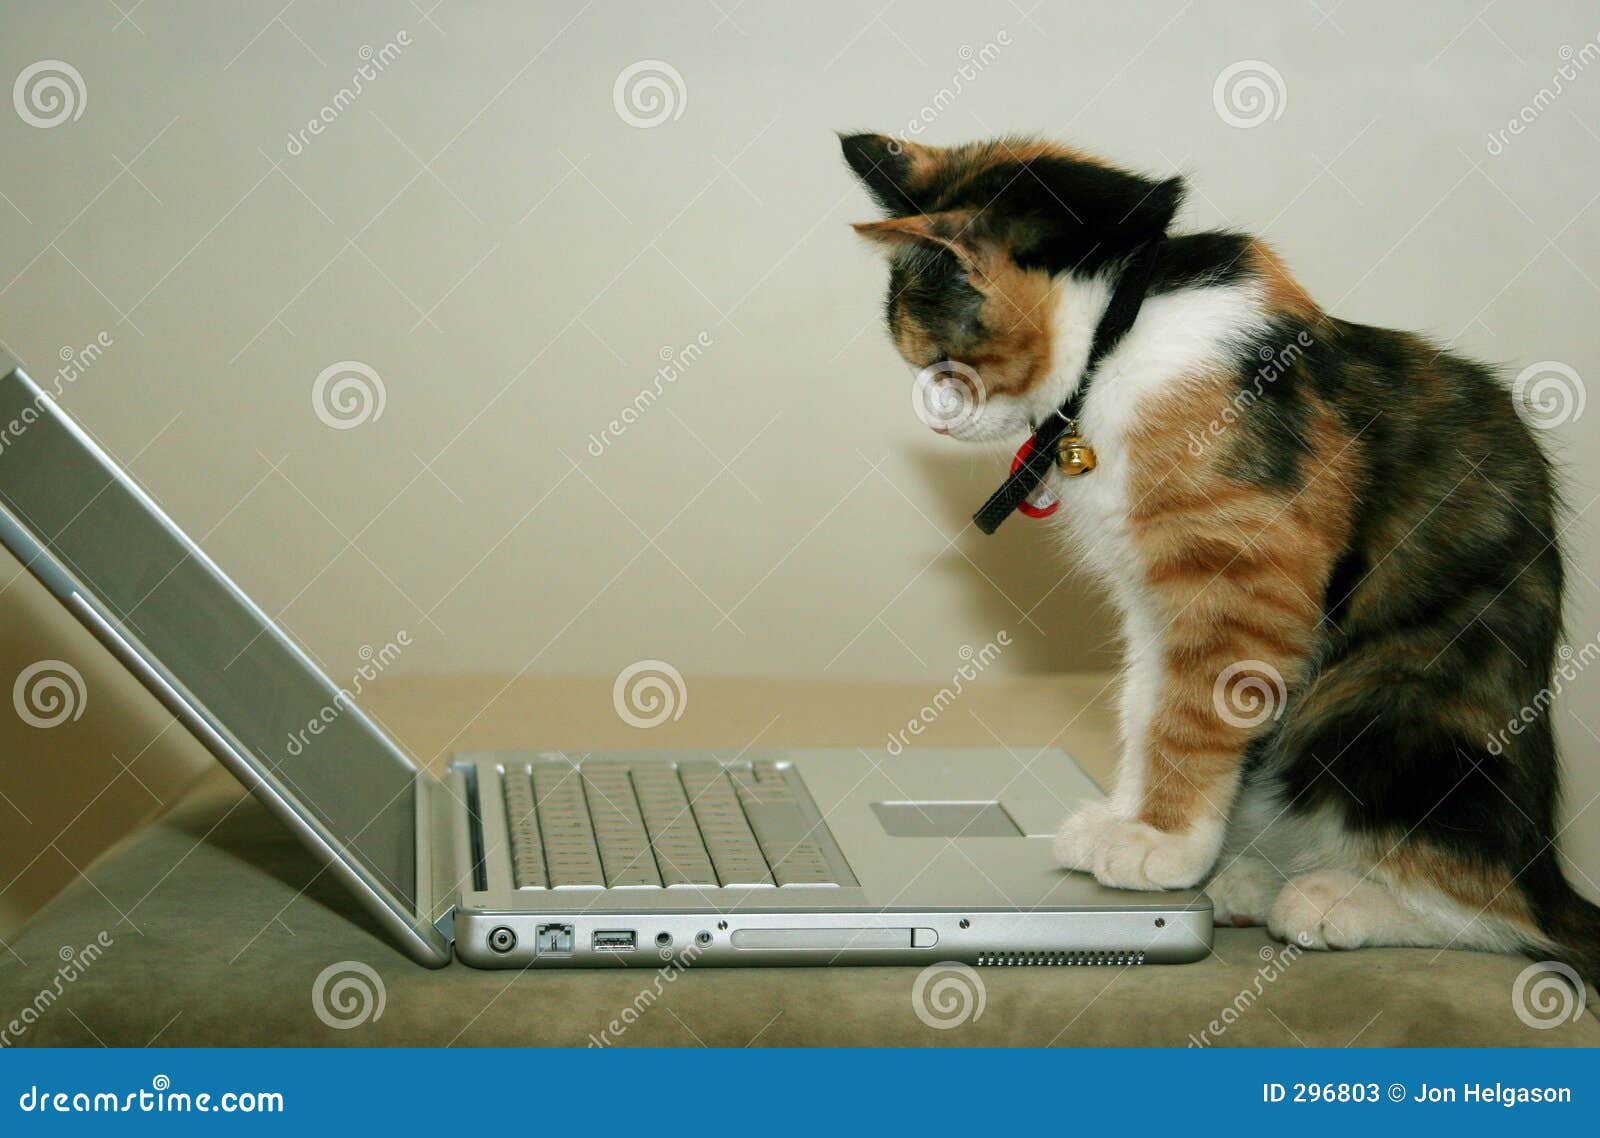 cat-using-computer-296803.jpg